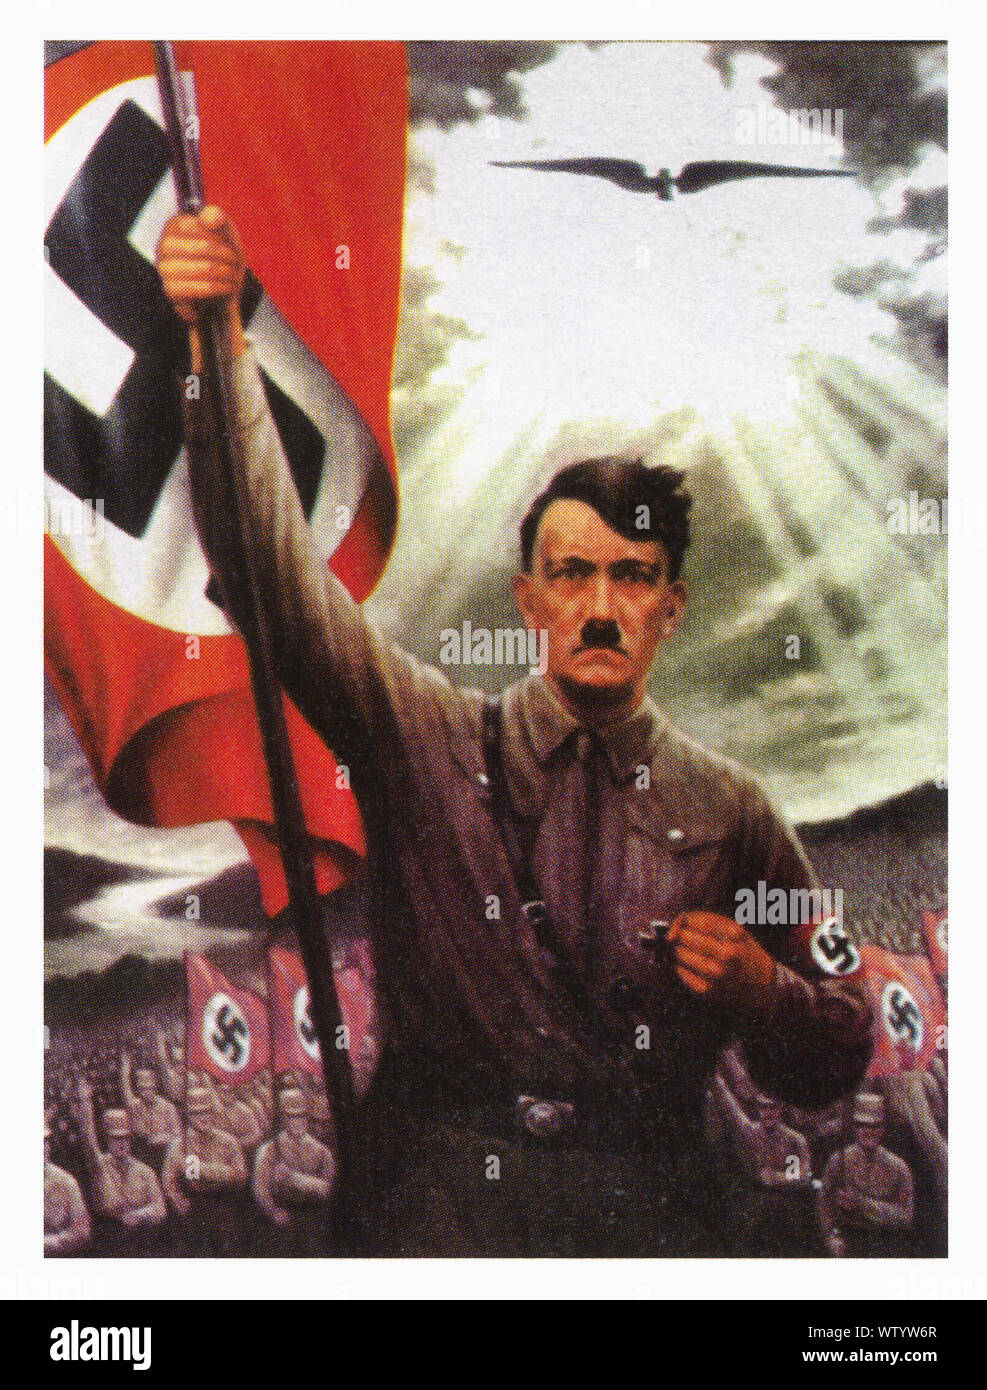 Adolf hitler on Nazi propaganda poster Stock Photo